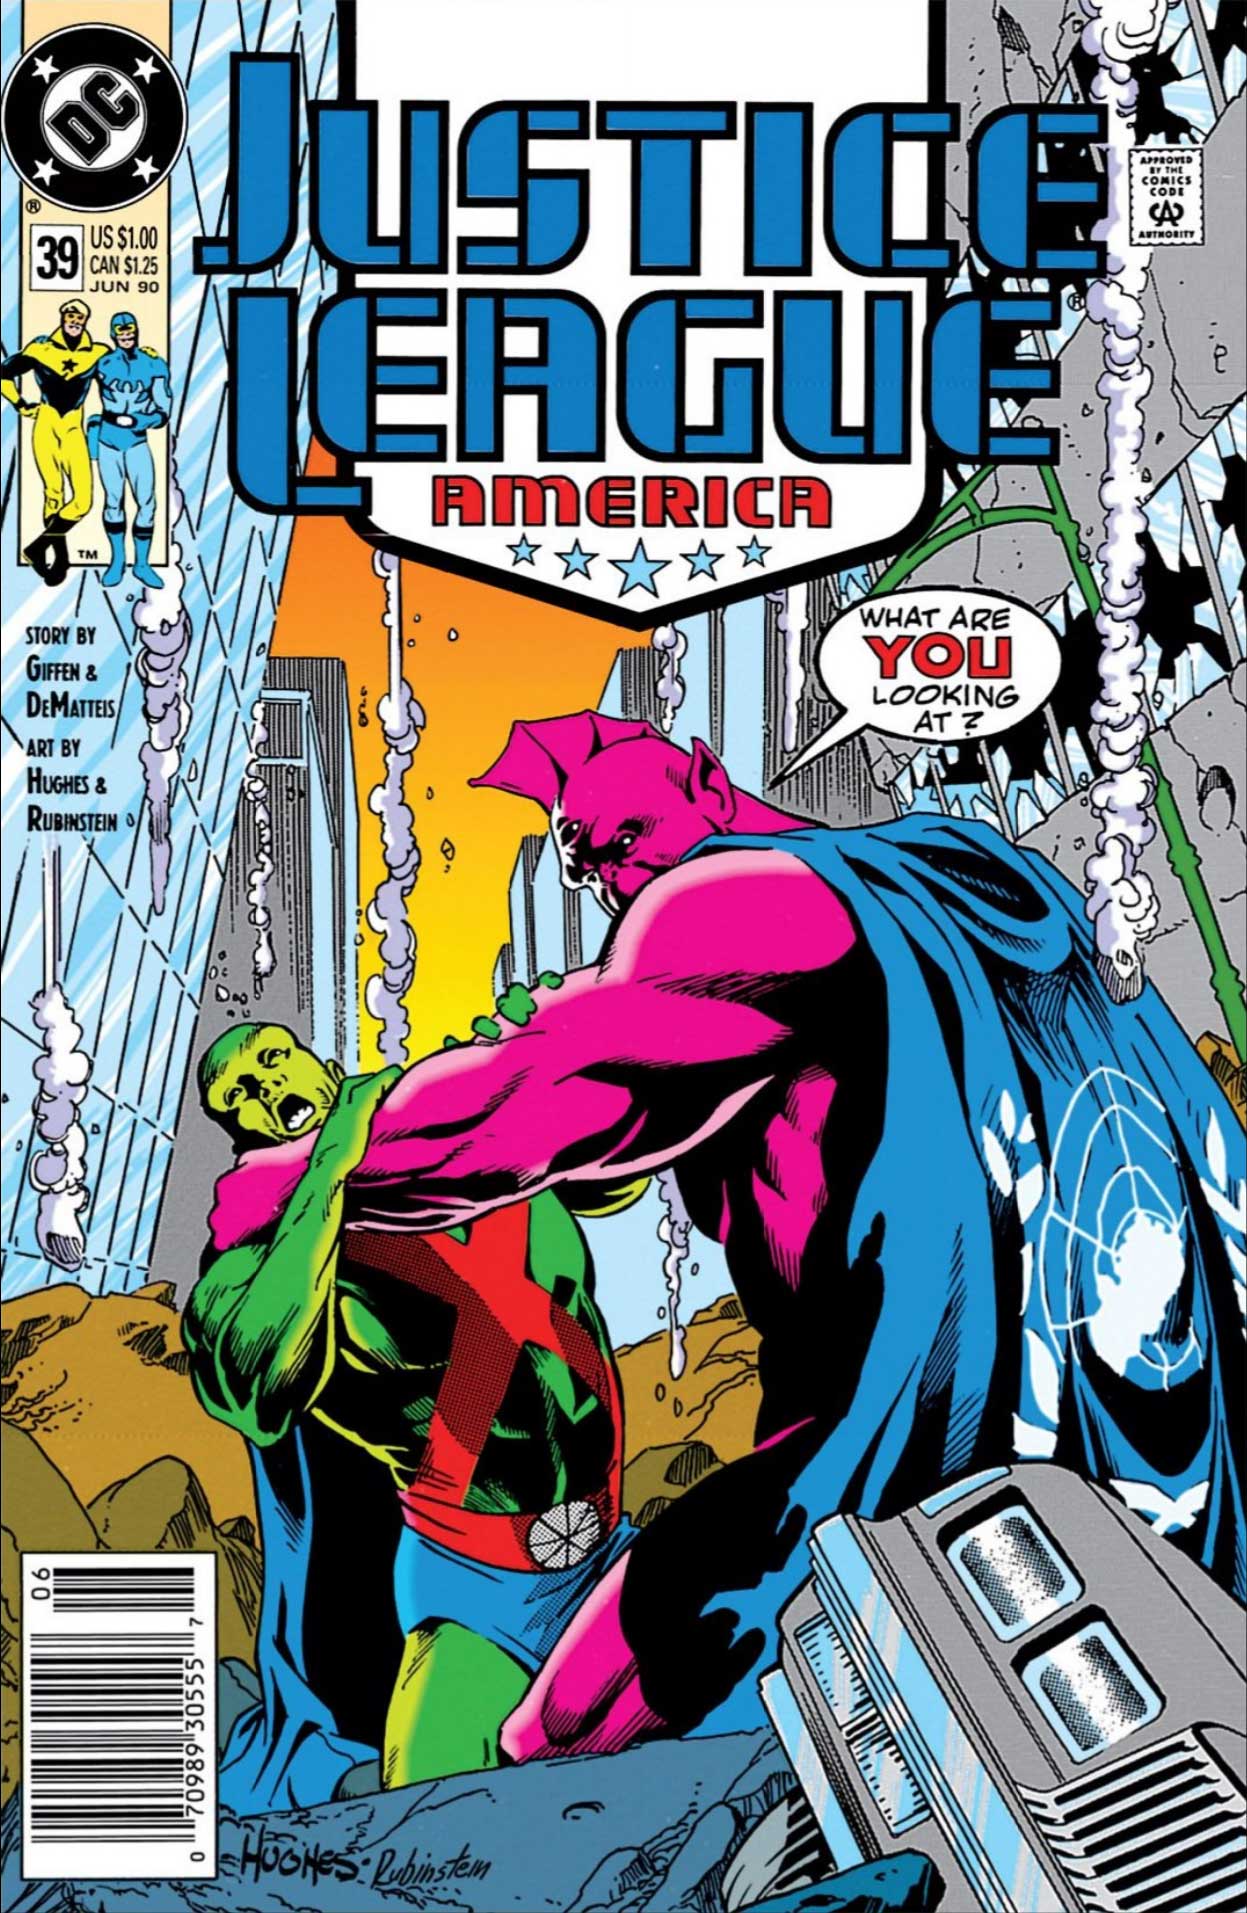 Justice League America #39 cover by Adam Hughes and Joe Rubinstein